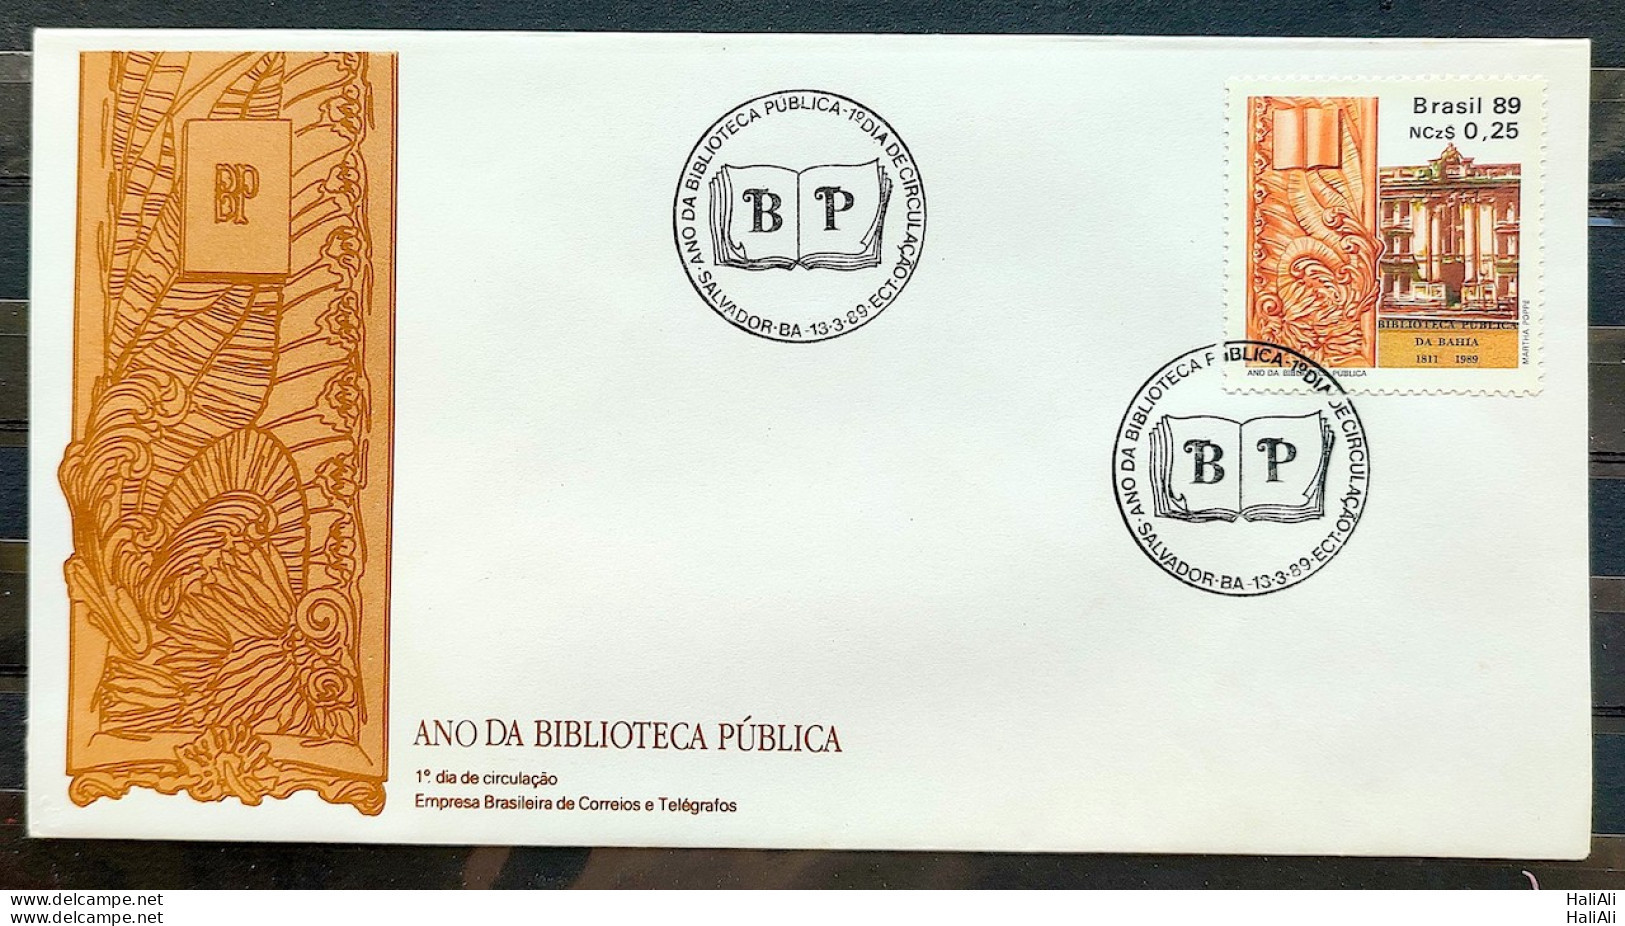 Brazil Envelope FDC 463 1989 Library Publics Bahia Literature EDUCATION CBC BA 02 - FDC